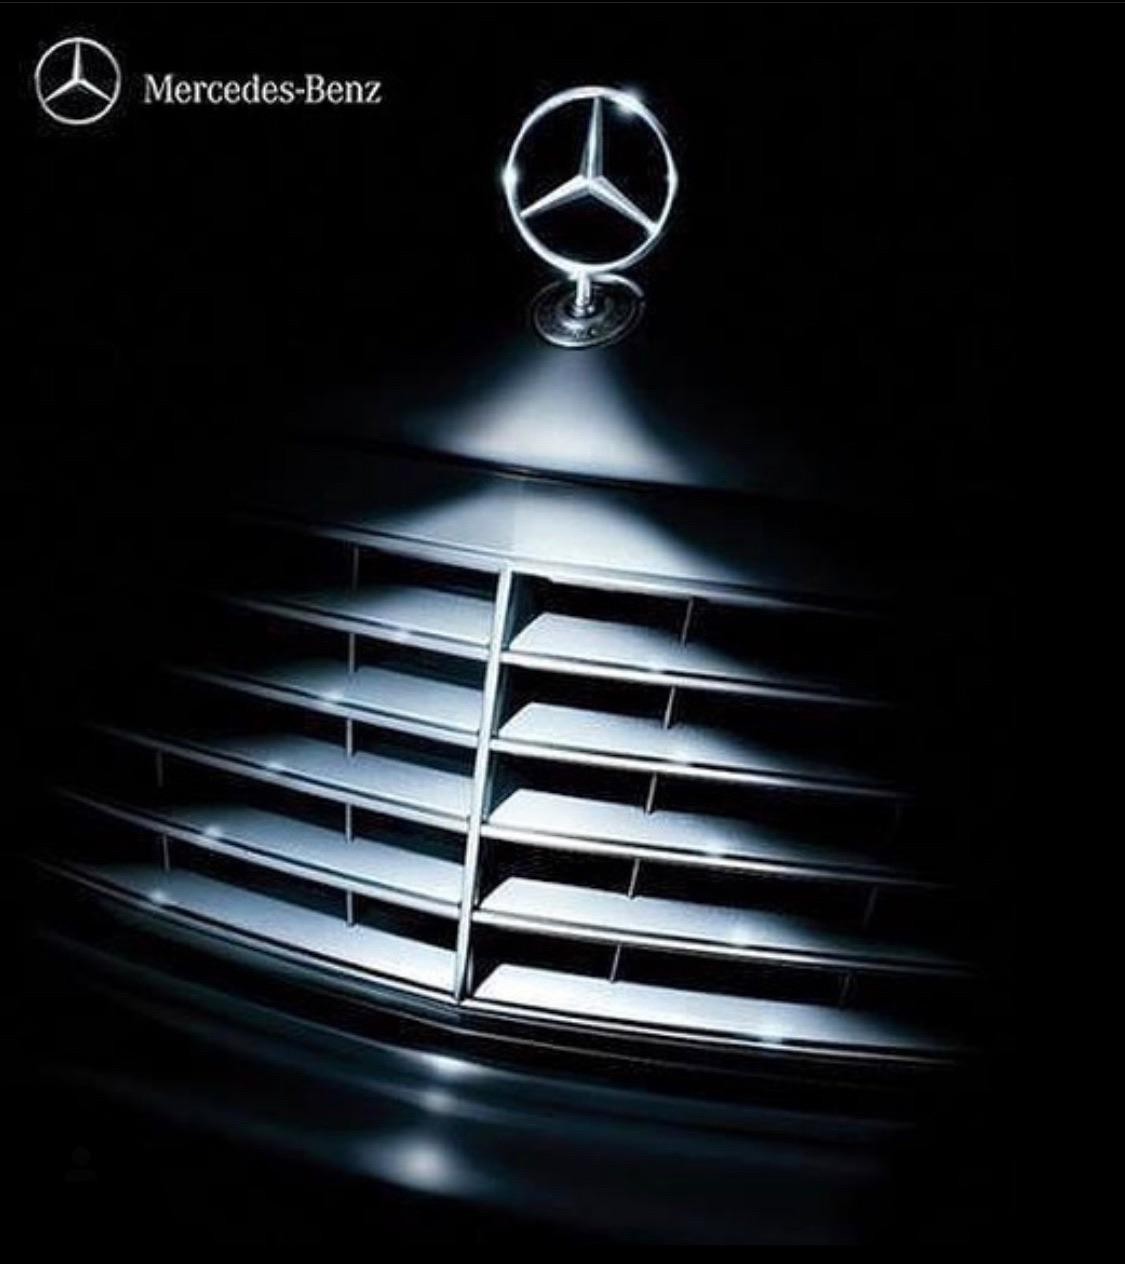 Mercedes Christmas Ad